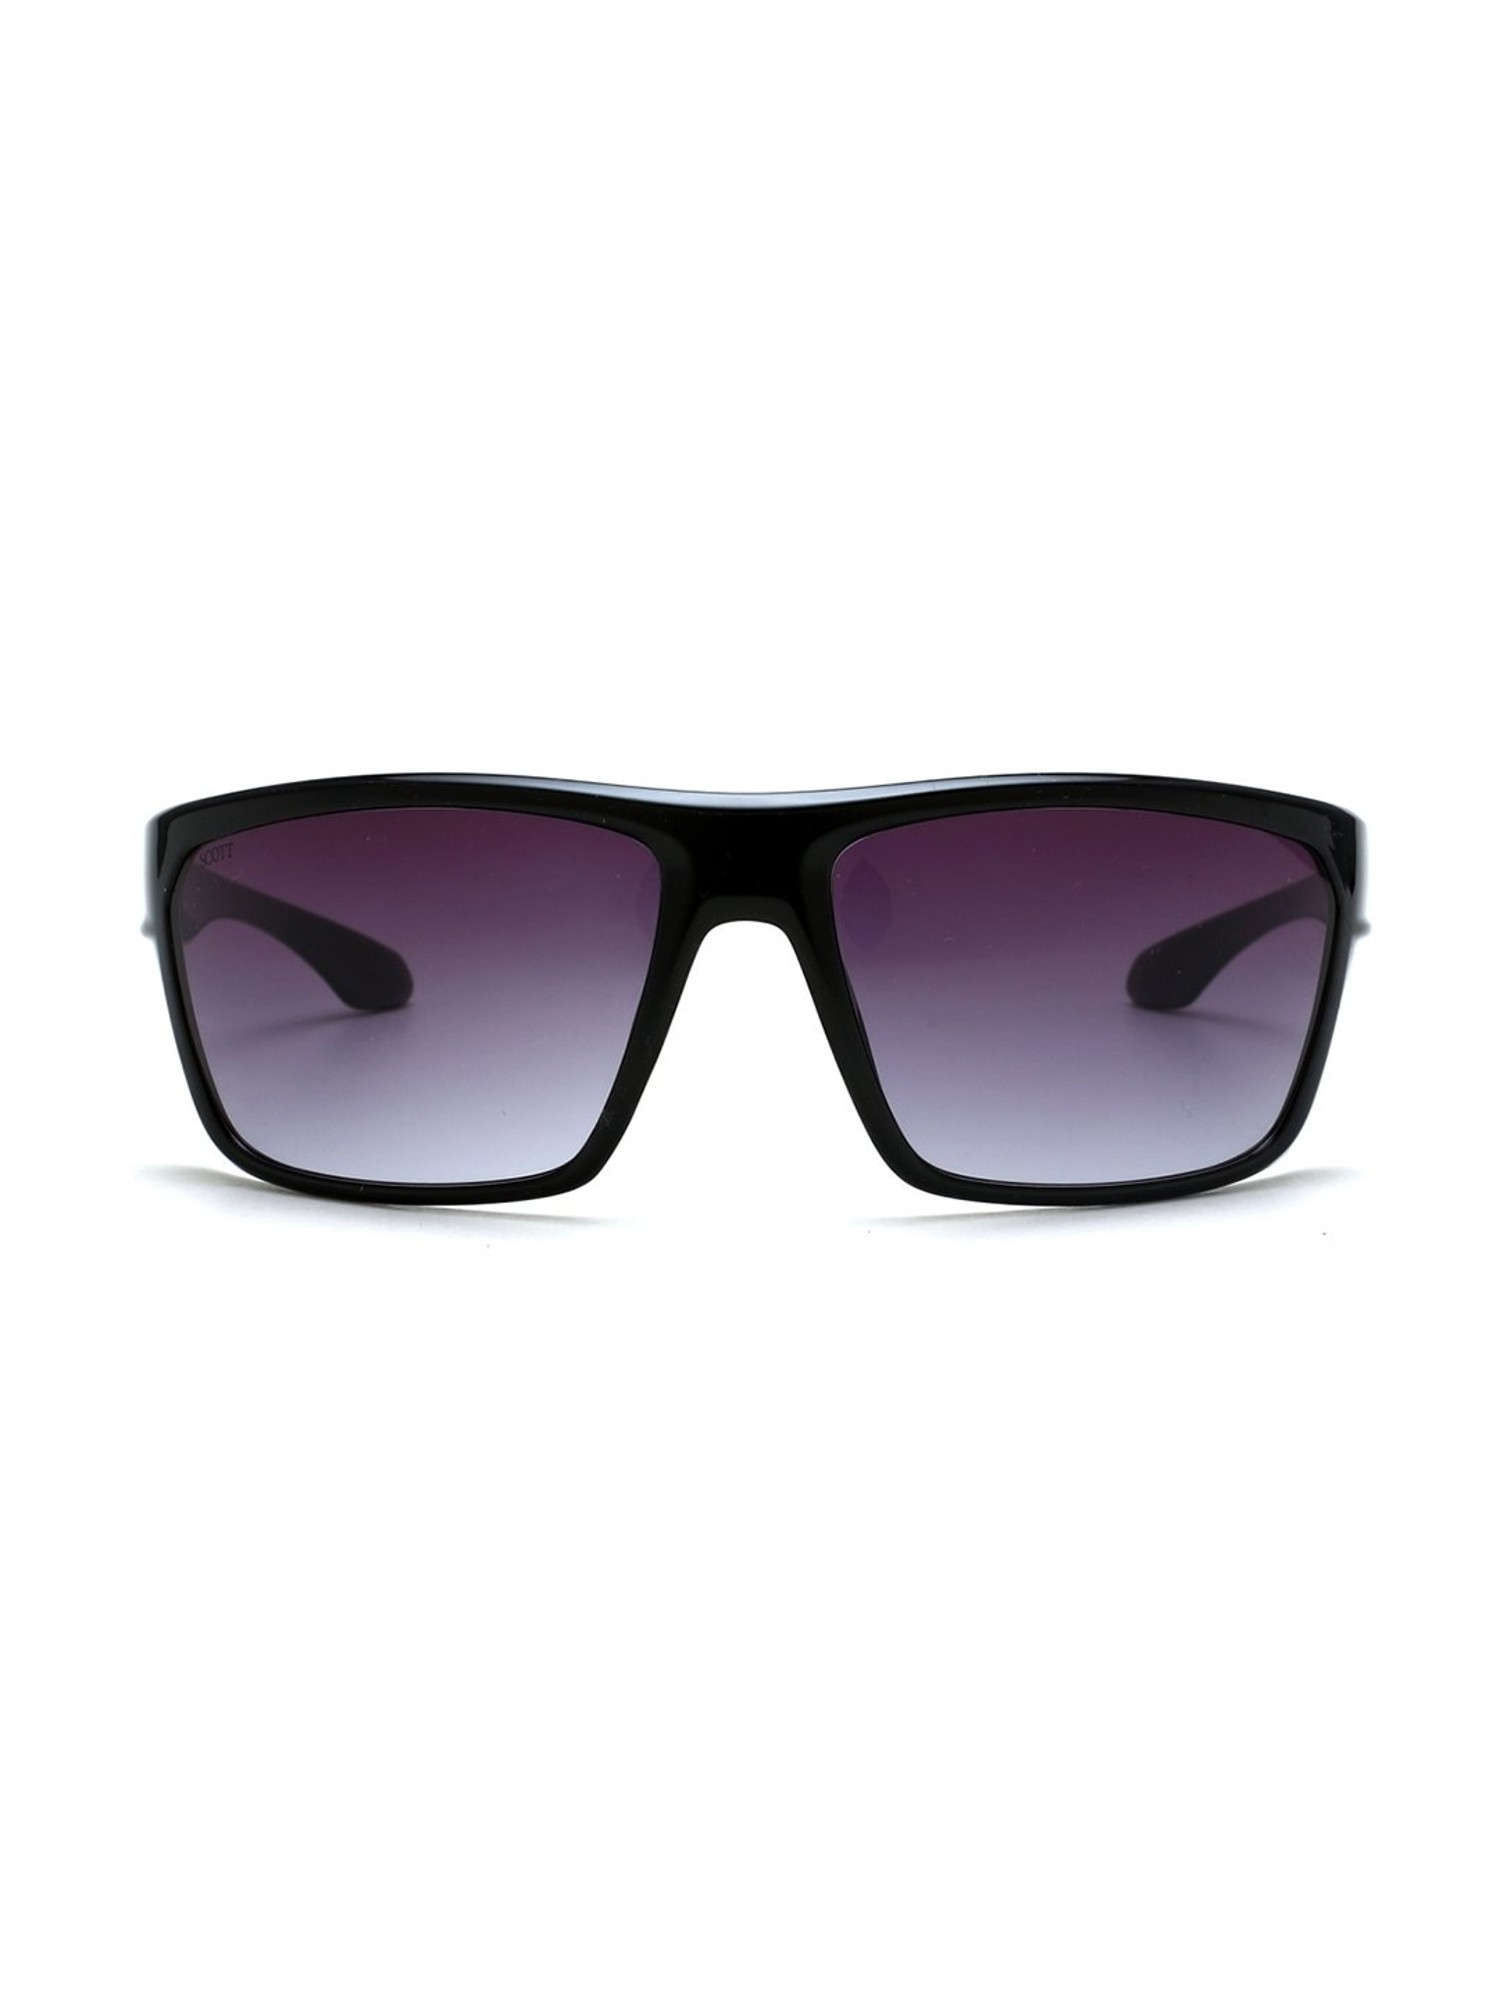 Scott Leap Performance Sunglasses w FREE Shipping!-hangkhonggiare.com.vn